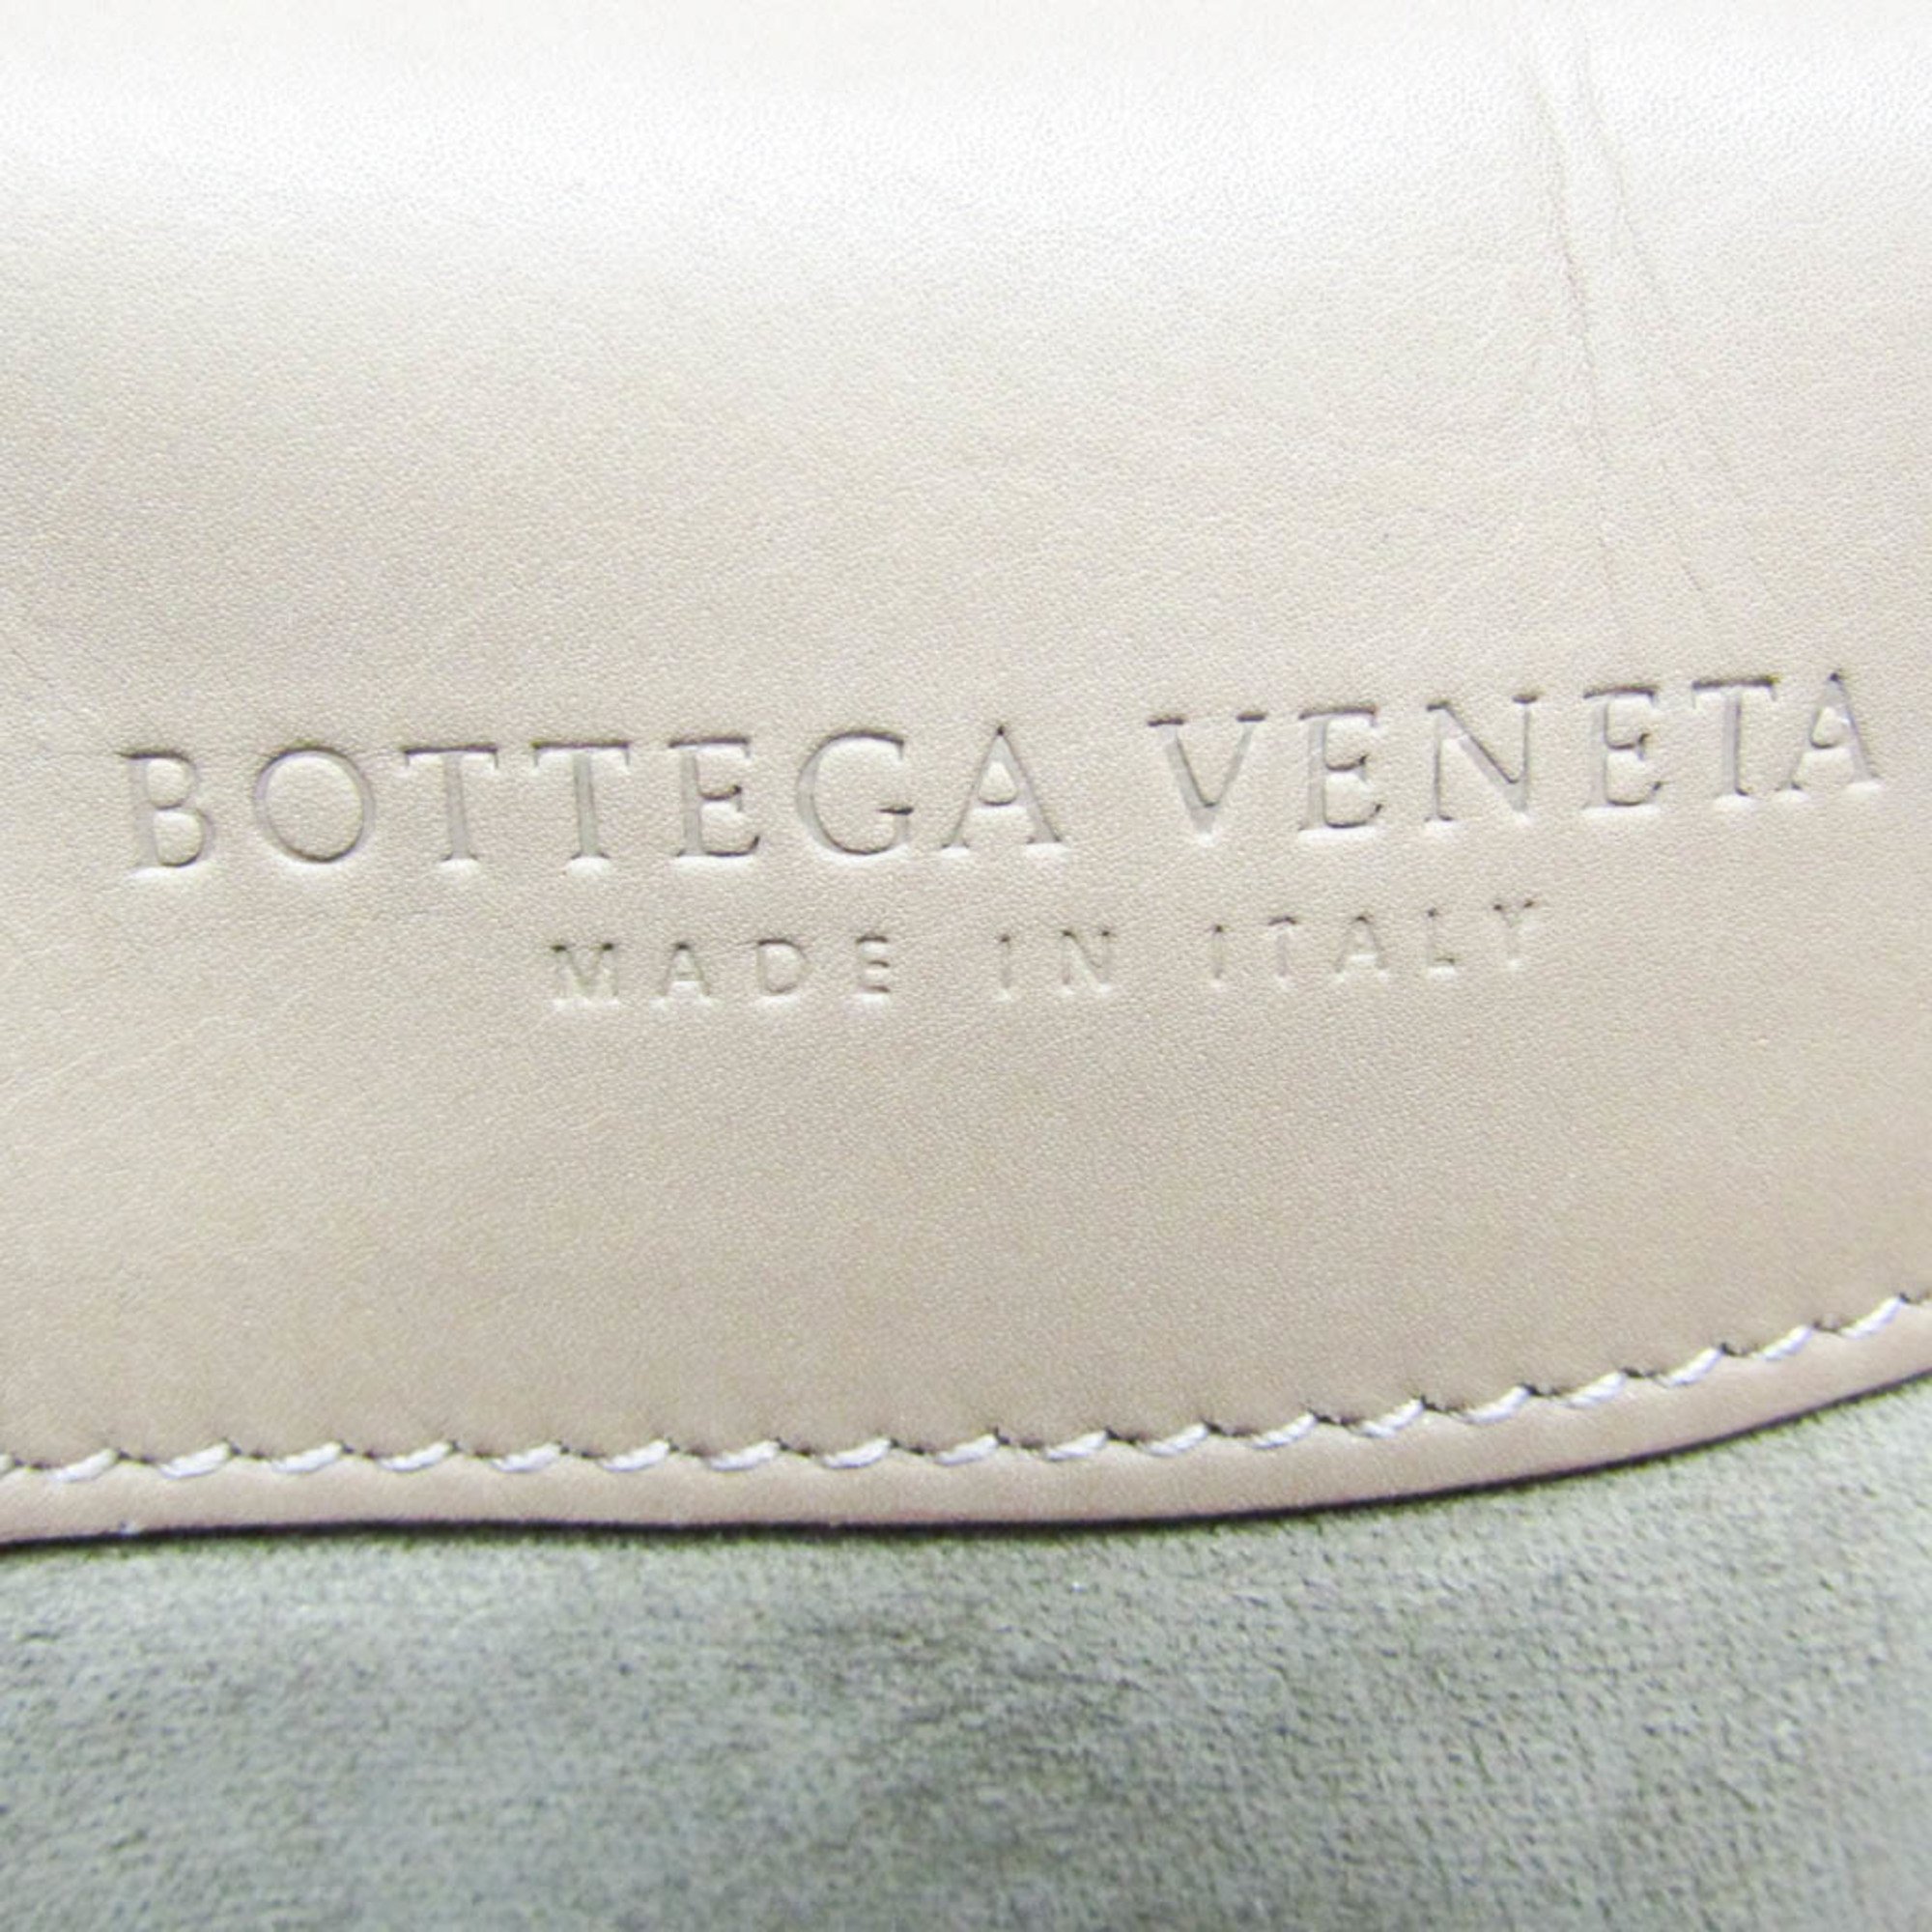 Bottega Veneta Women's Leather Shoulder Bag Pink Beige